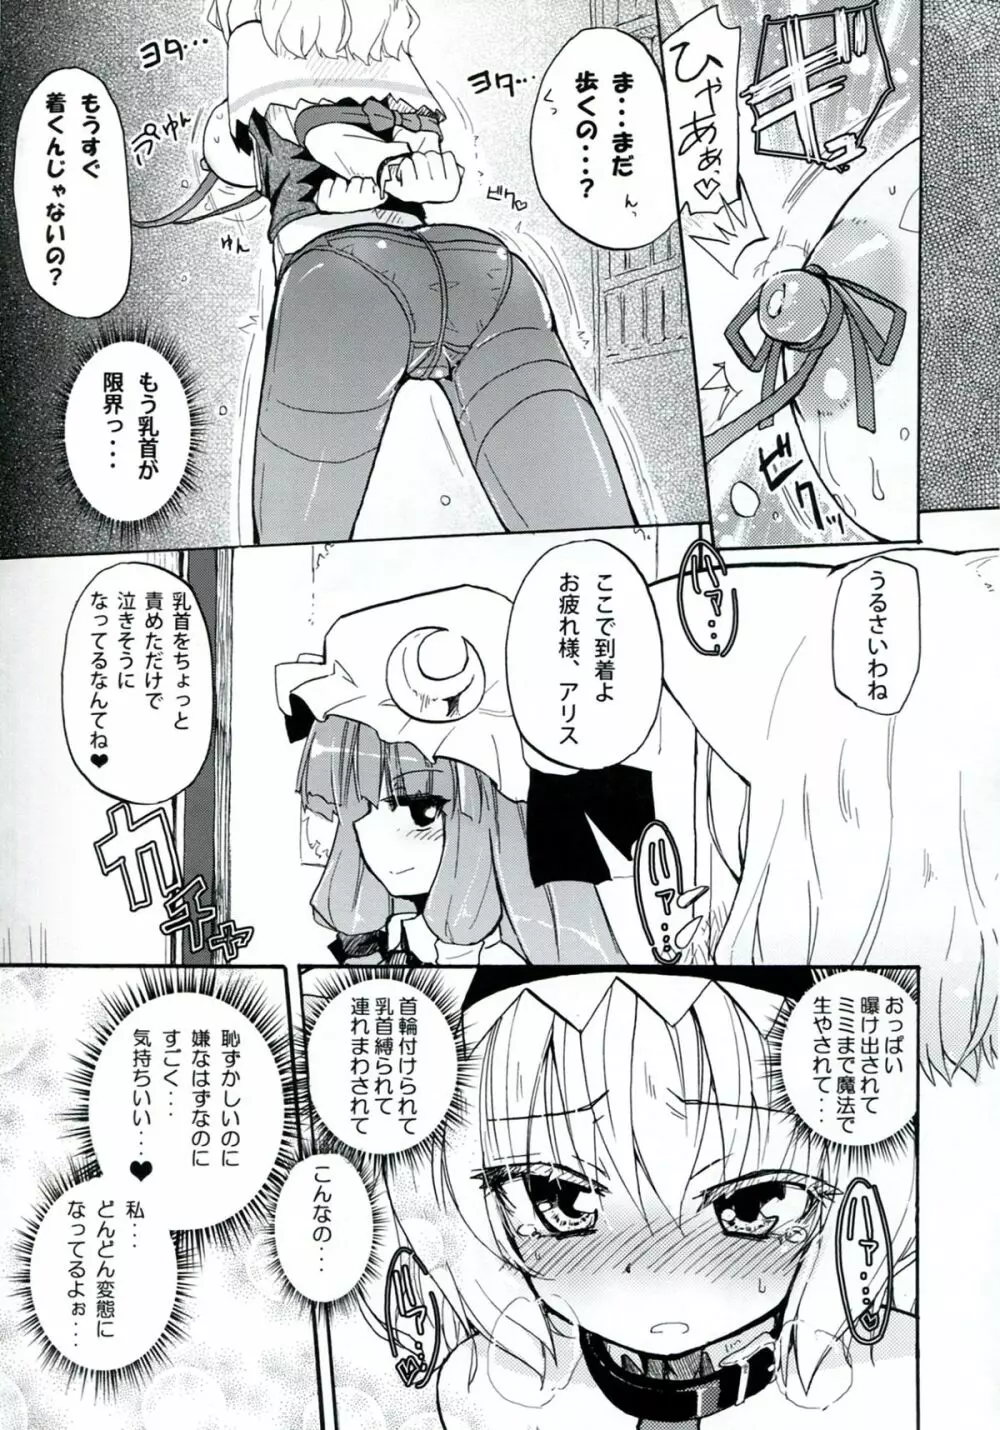 Homuraya Milk ★ Collection 2 - page15